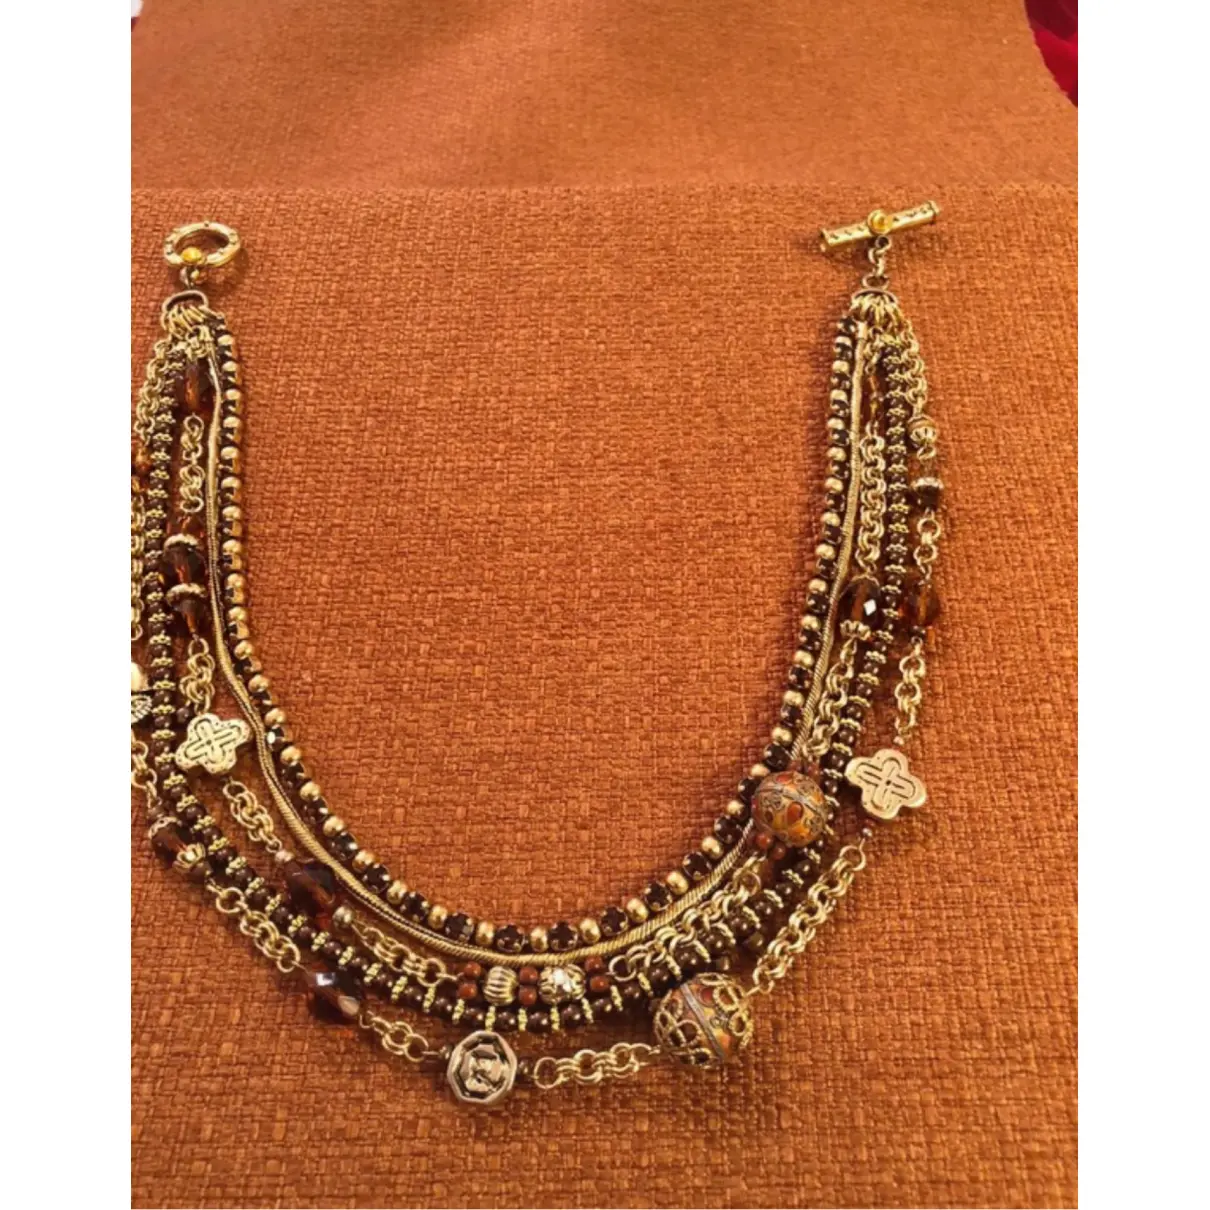 Luxury Reminiscence Necklaces Women - Vintage